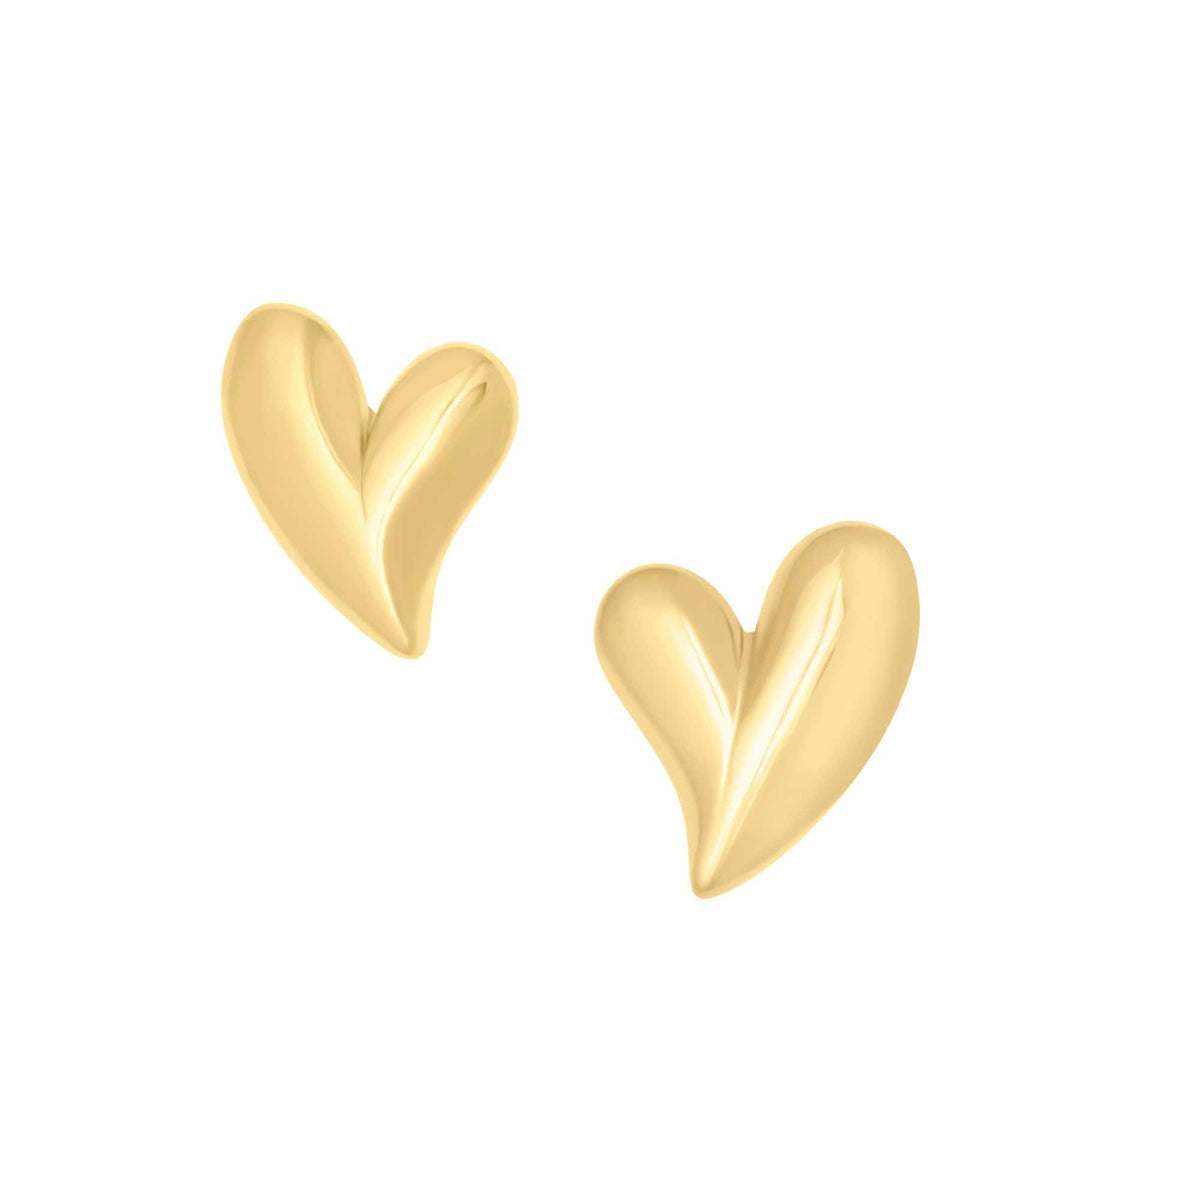 BohoMoon Stainless Steel Ariana Stud Earrings Gold